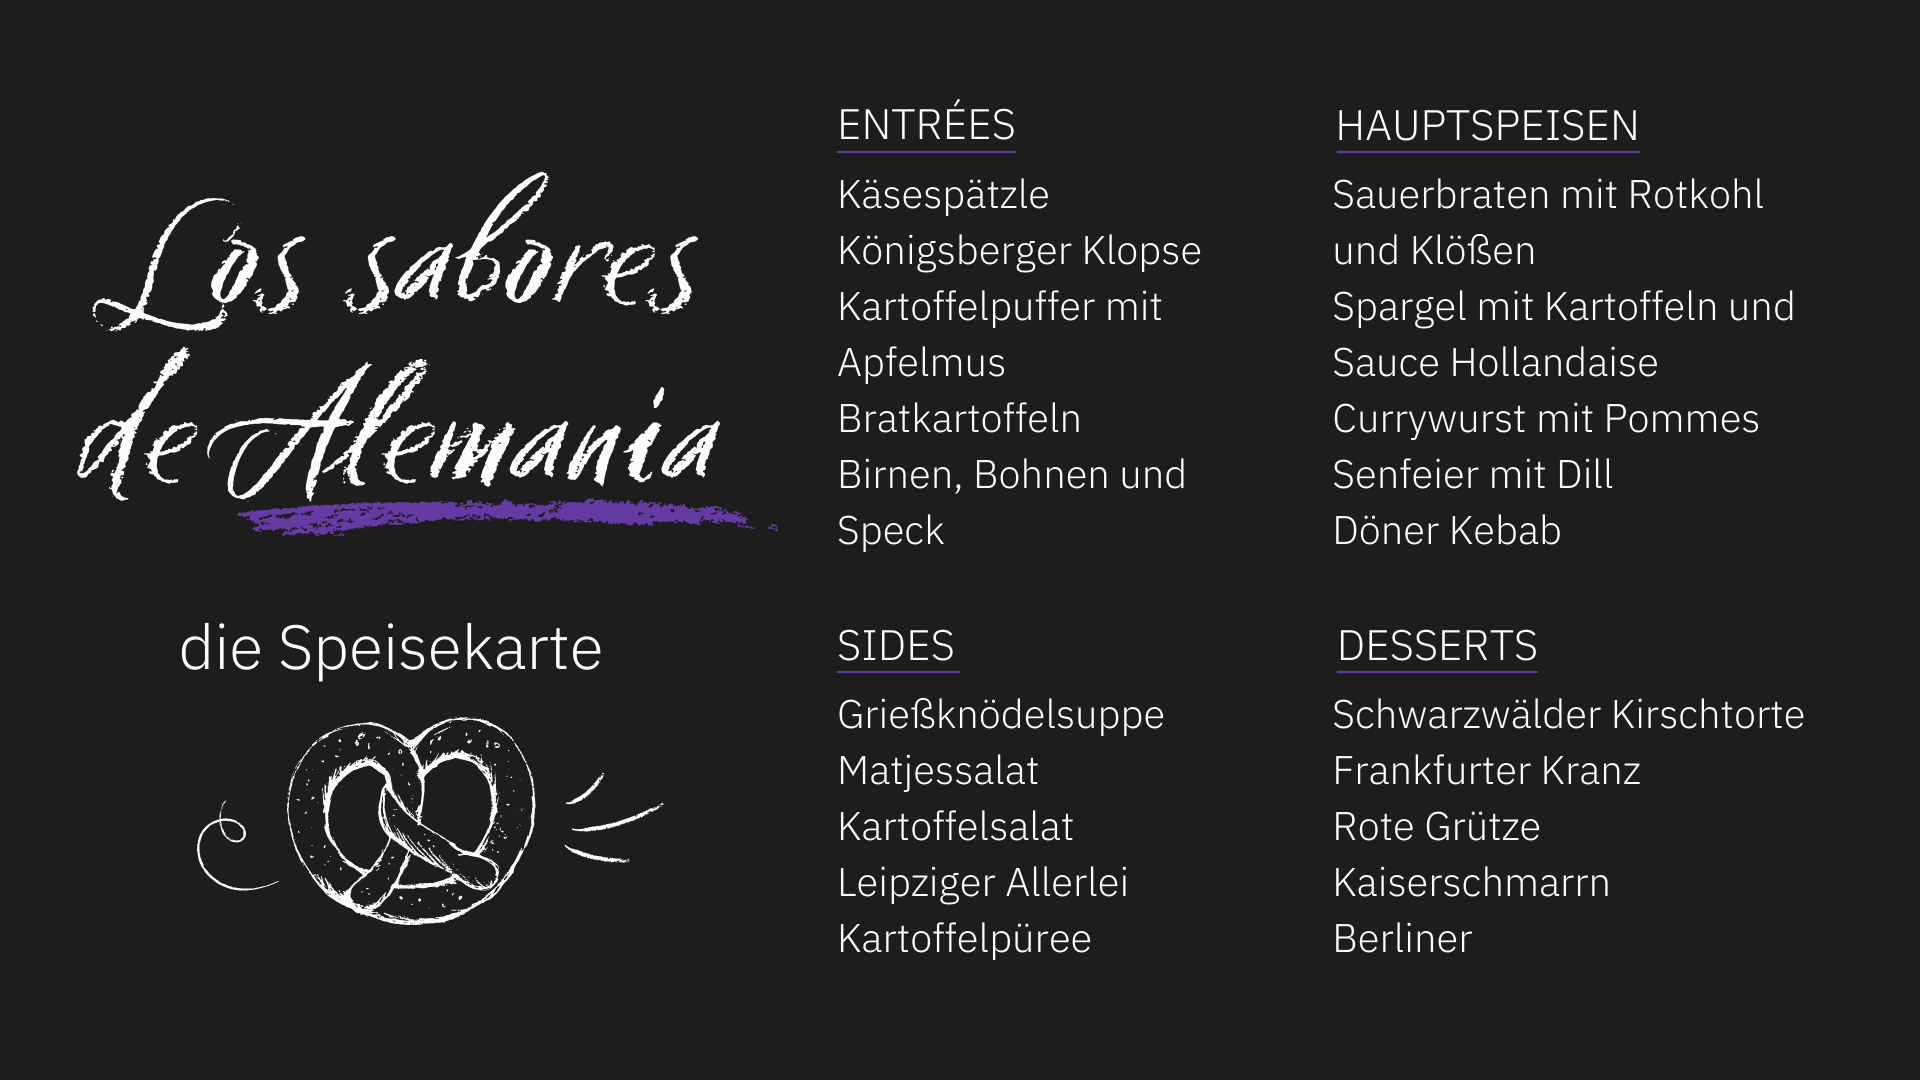 How to order food in German with a restaurant menu in German.